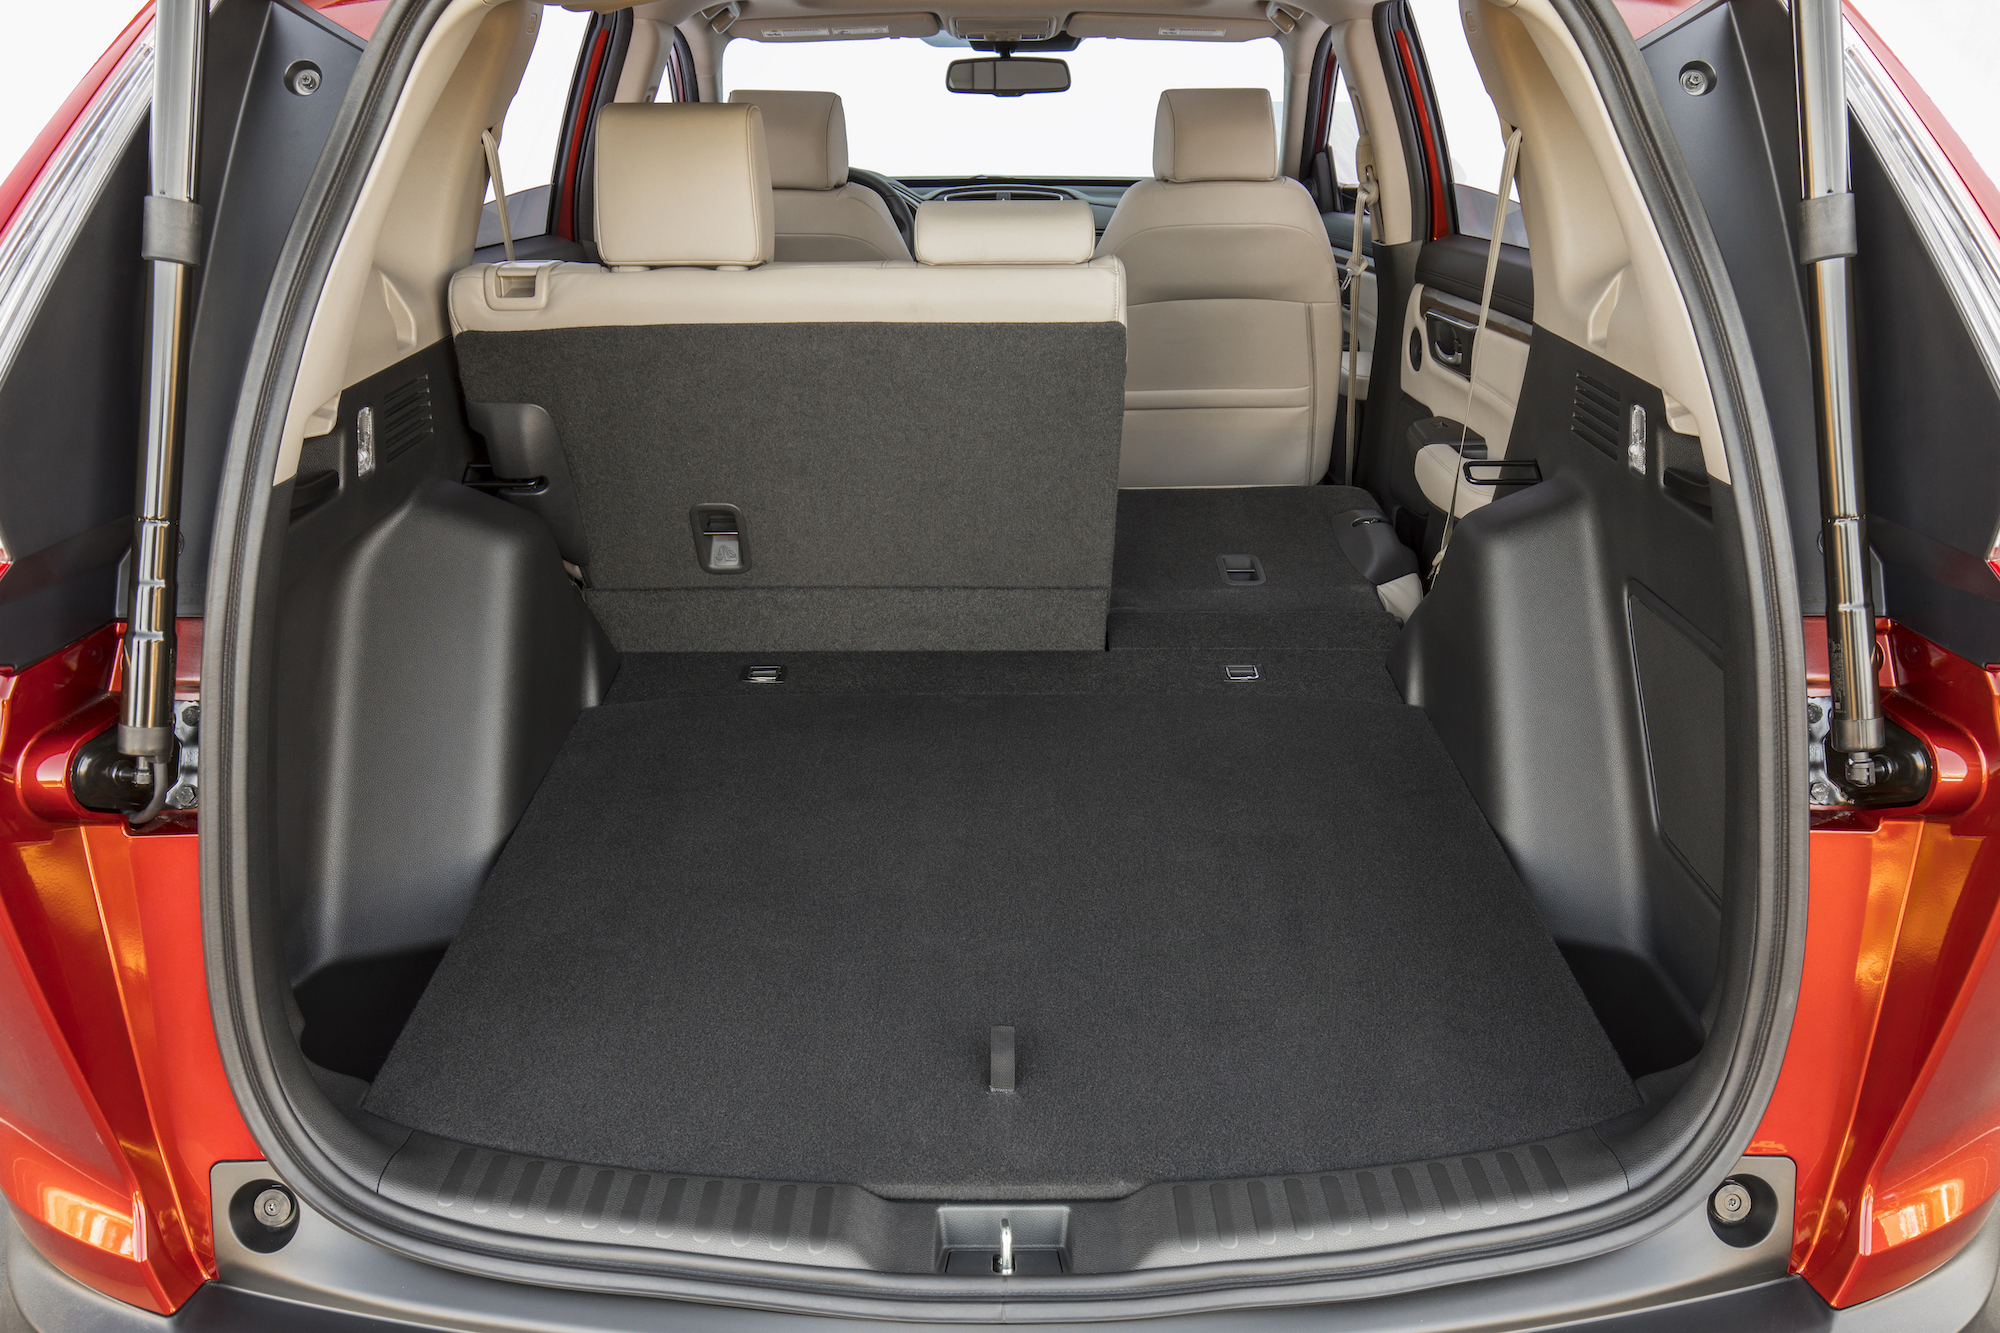 The rear cargo area of a 2019 Honda CR-V compact crossover SUV